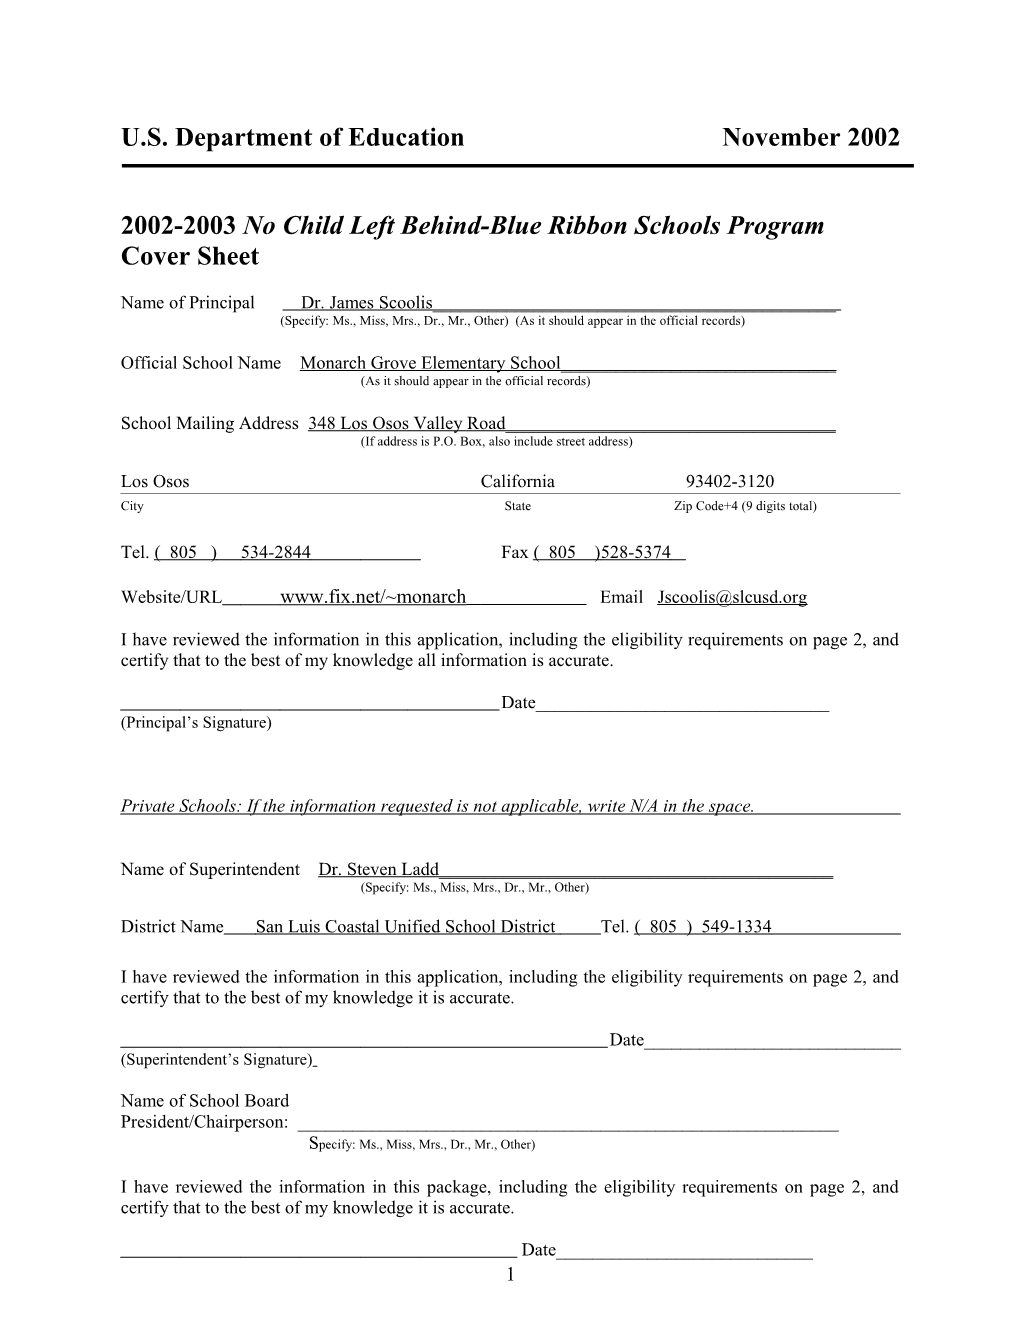 Monarch Grove Elementary School 2003 No Child Left Behind-Blue Ribbon School (Msword)